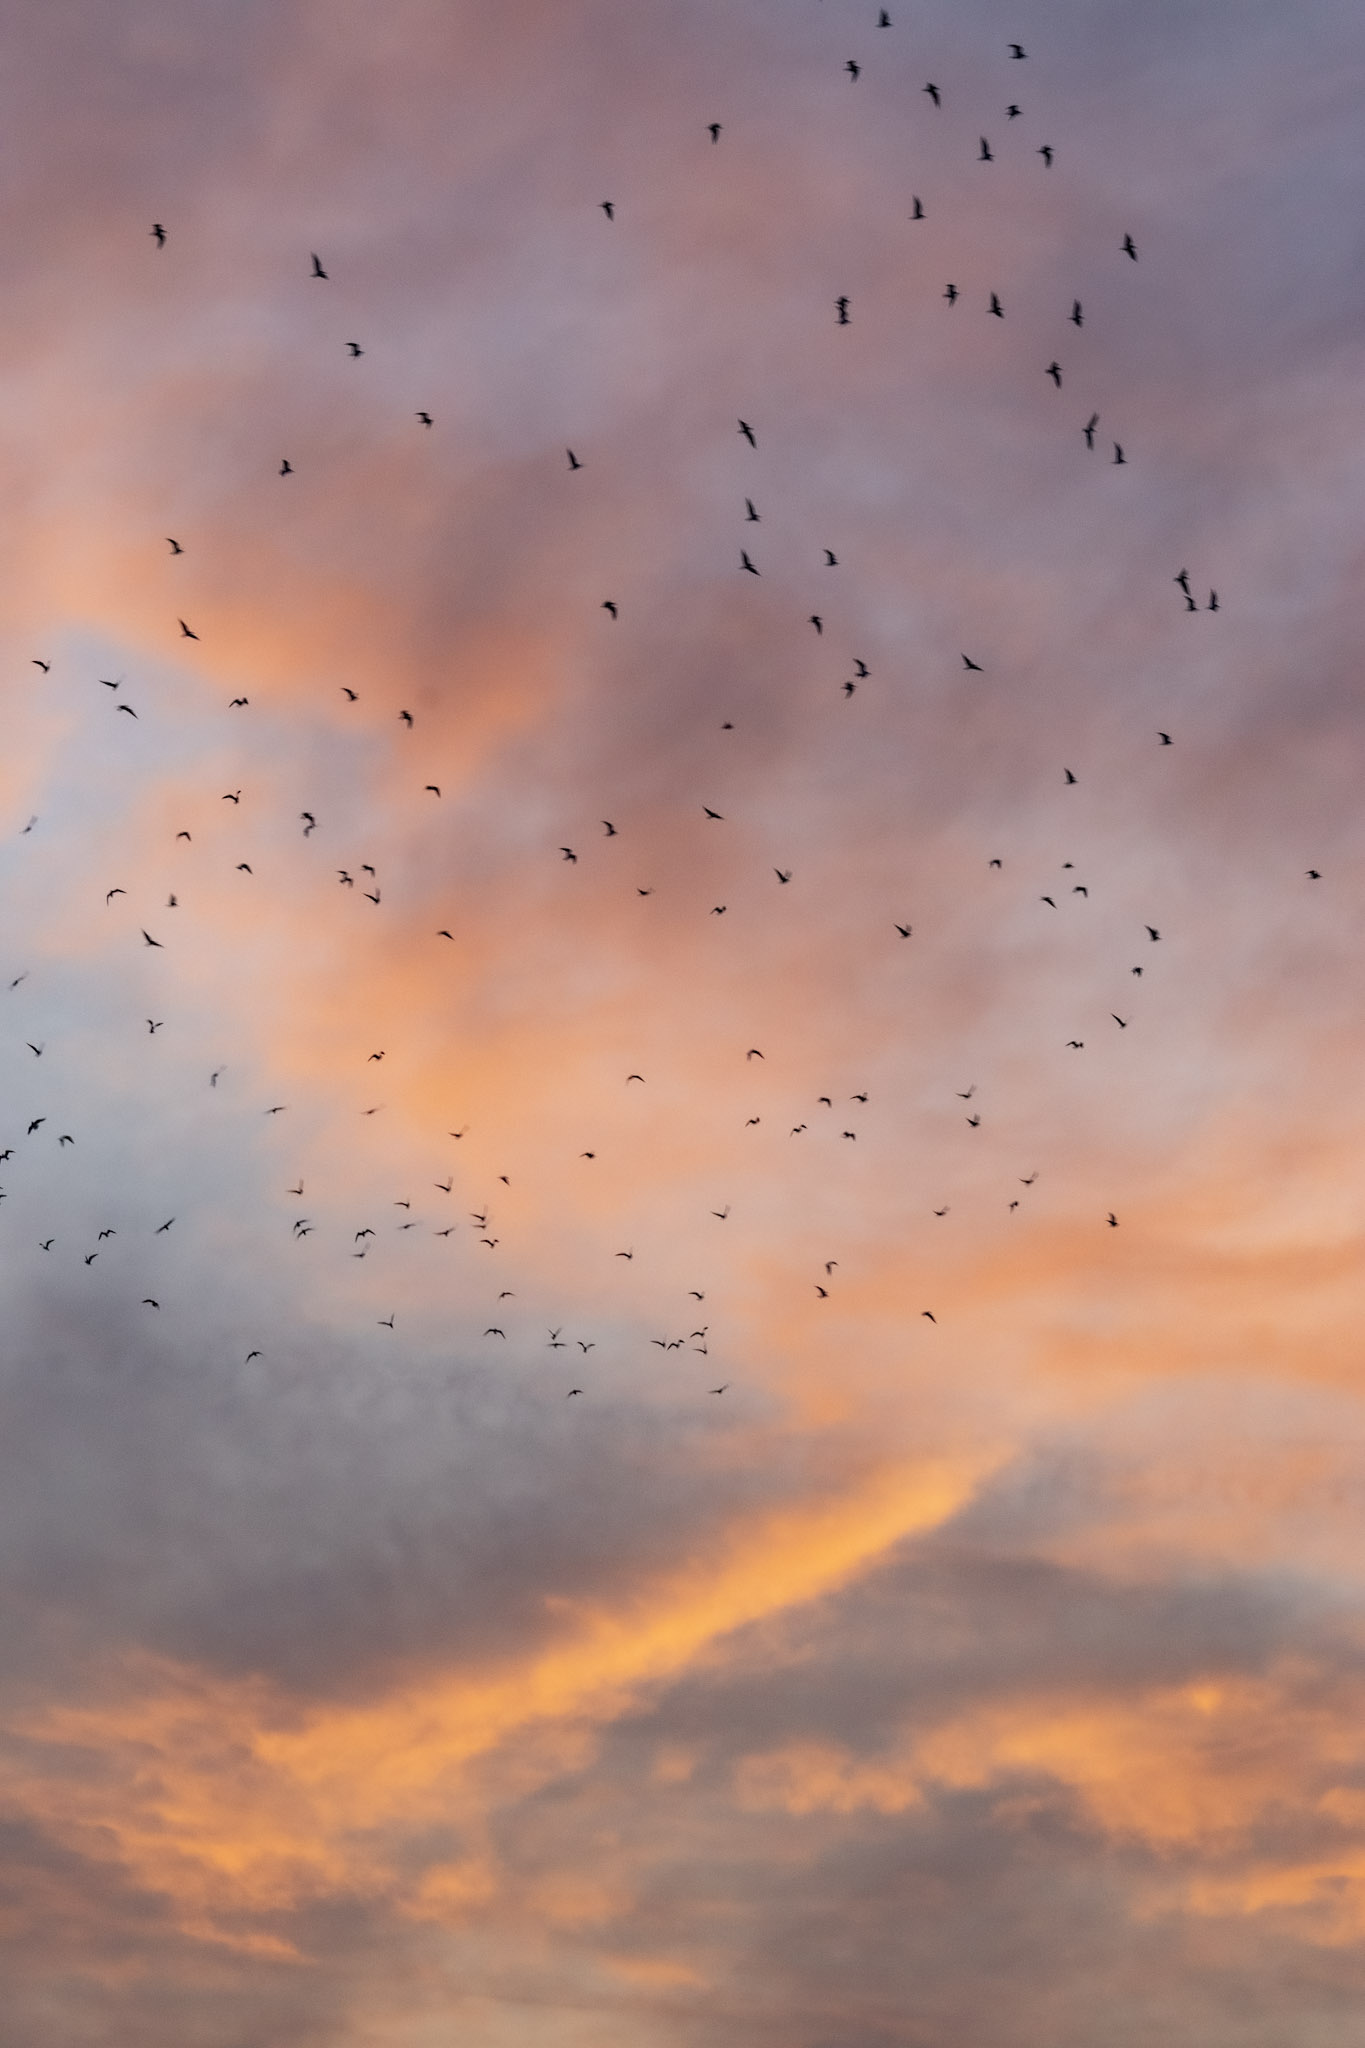 Flock at sunset...